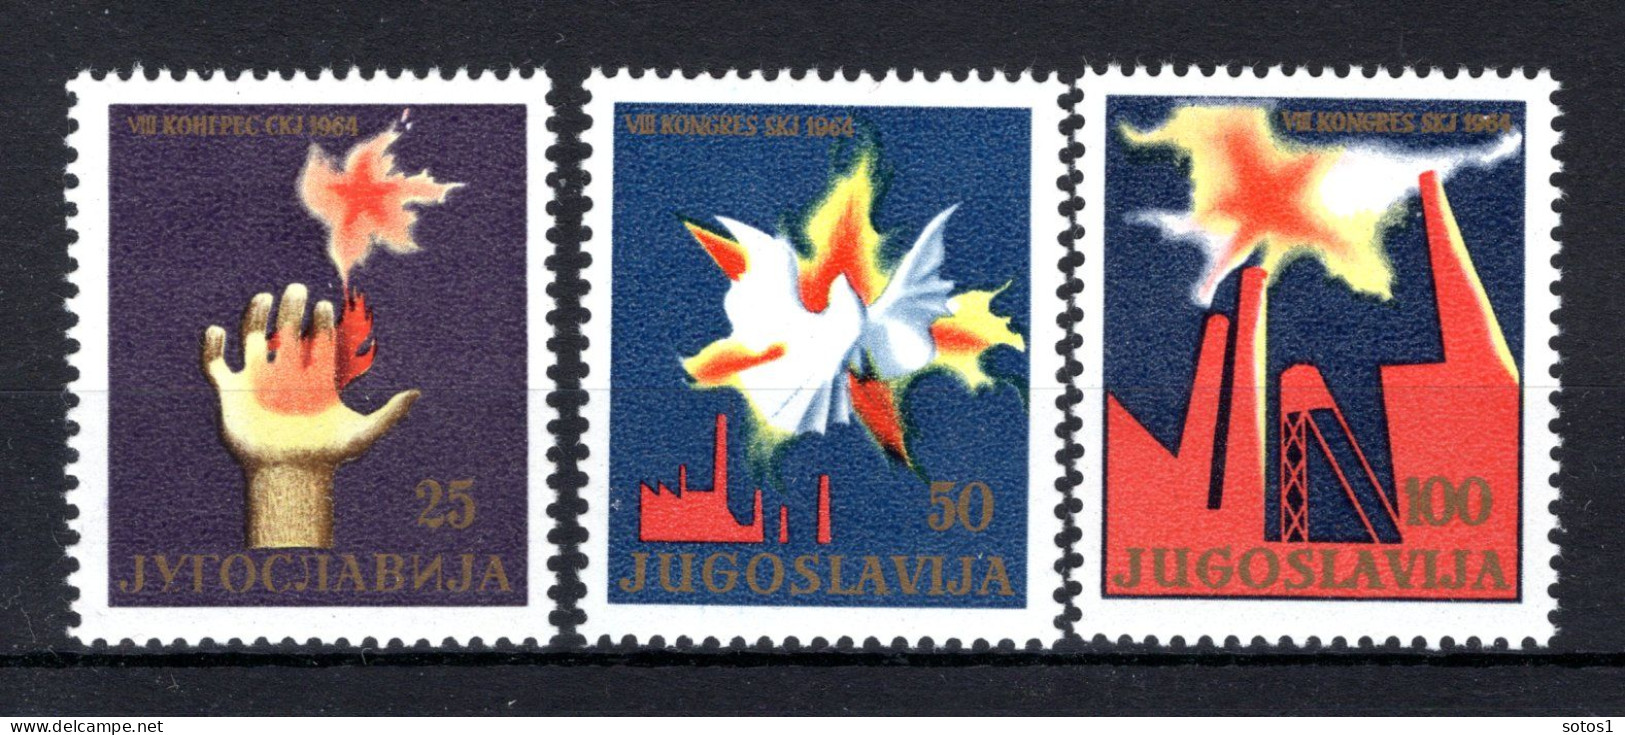 JOEGOSLAVIE Yt. 998/1000 MNH 1964 - Nuevos